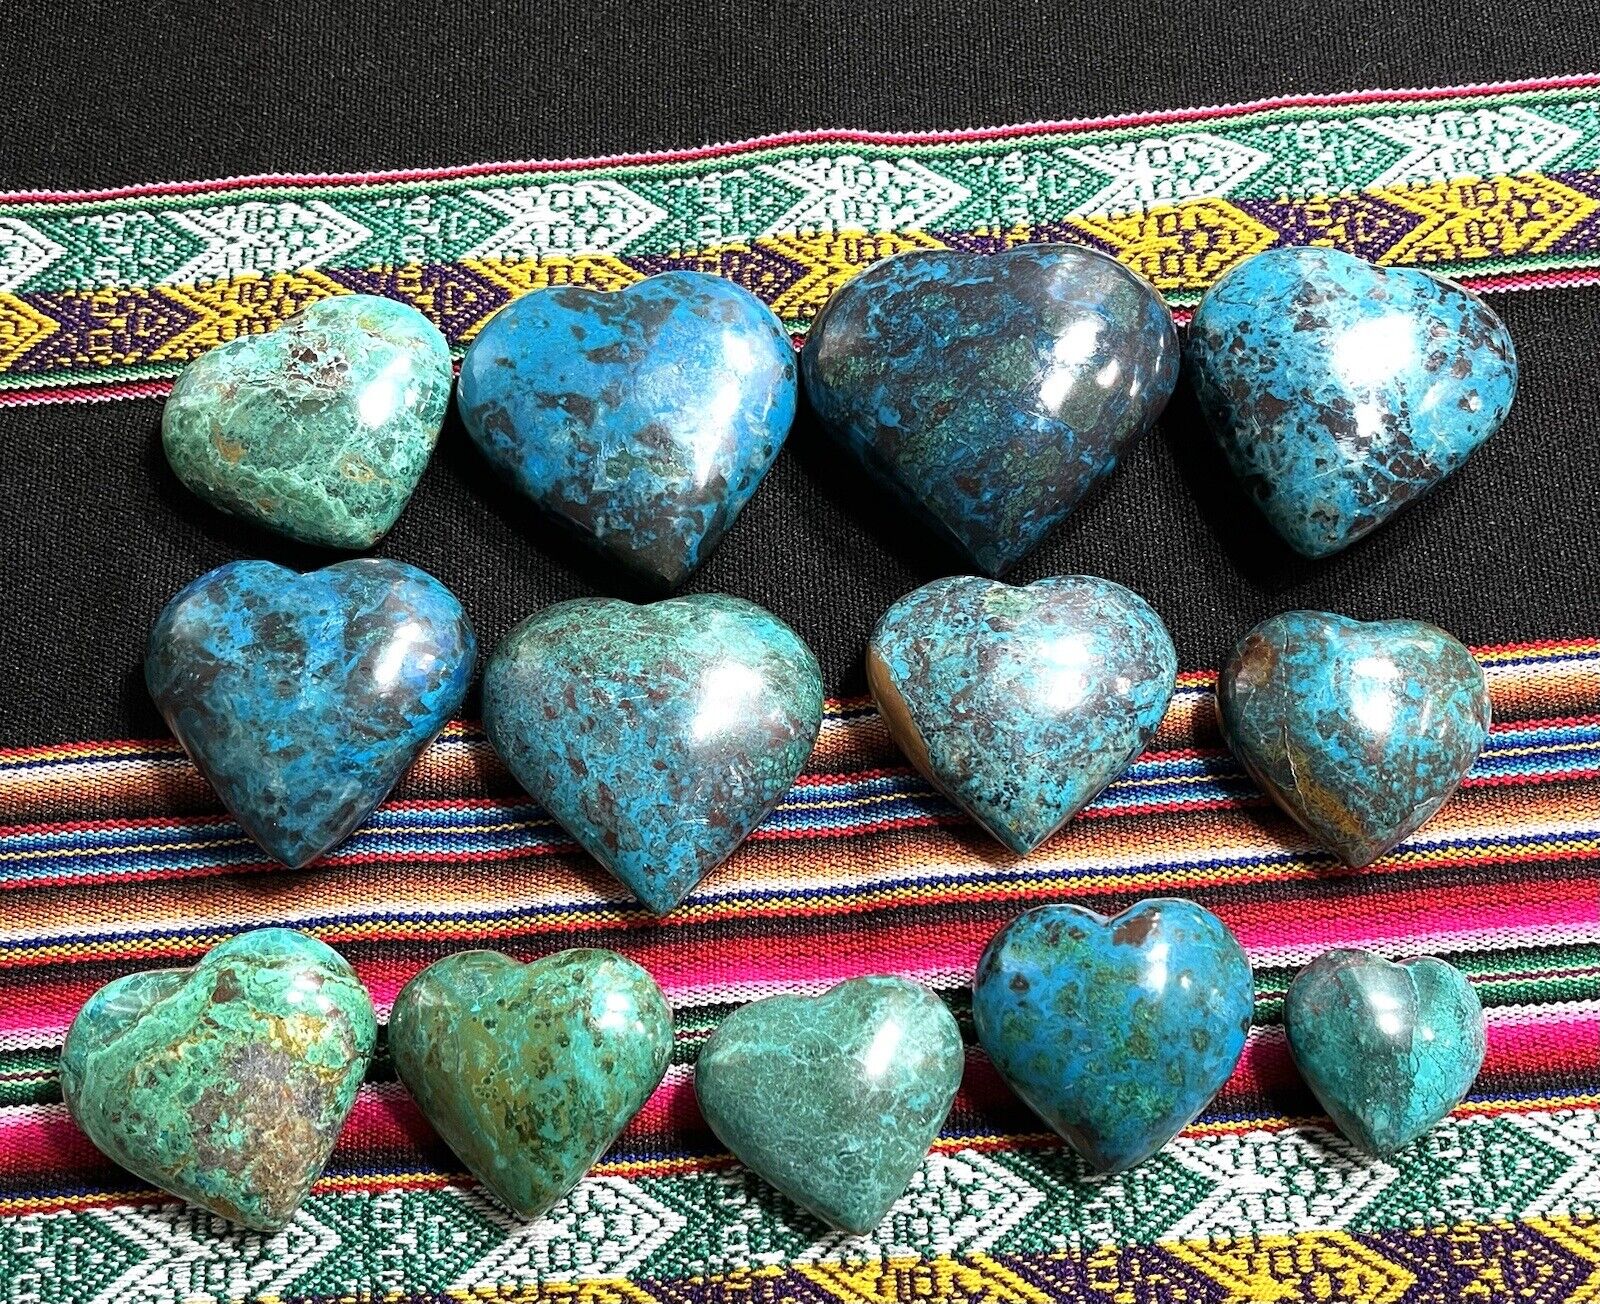 13  Heart Pieces  (3 Pounds 10 Ounces ) Chrysocolla Semiprecious Stone From Peru